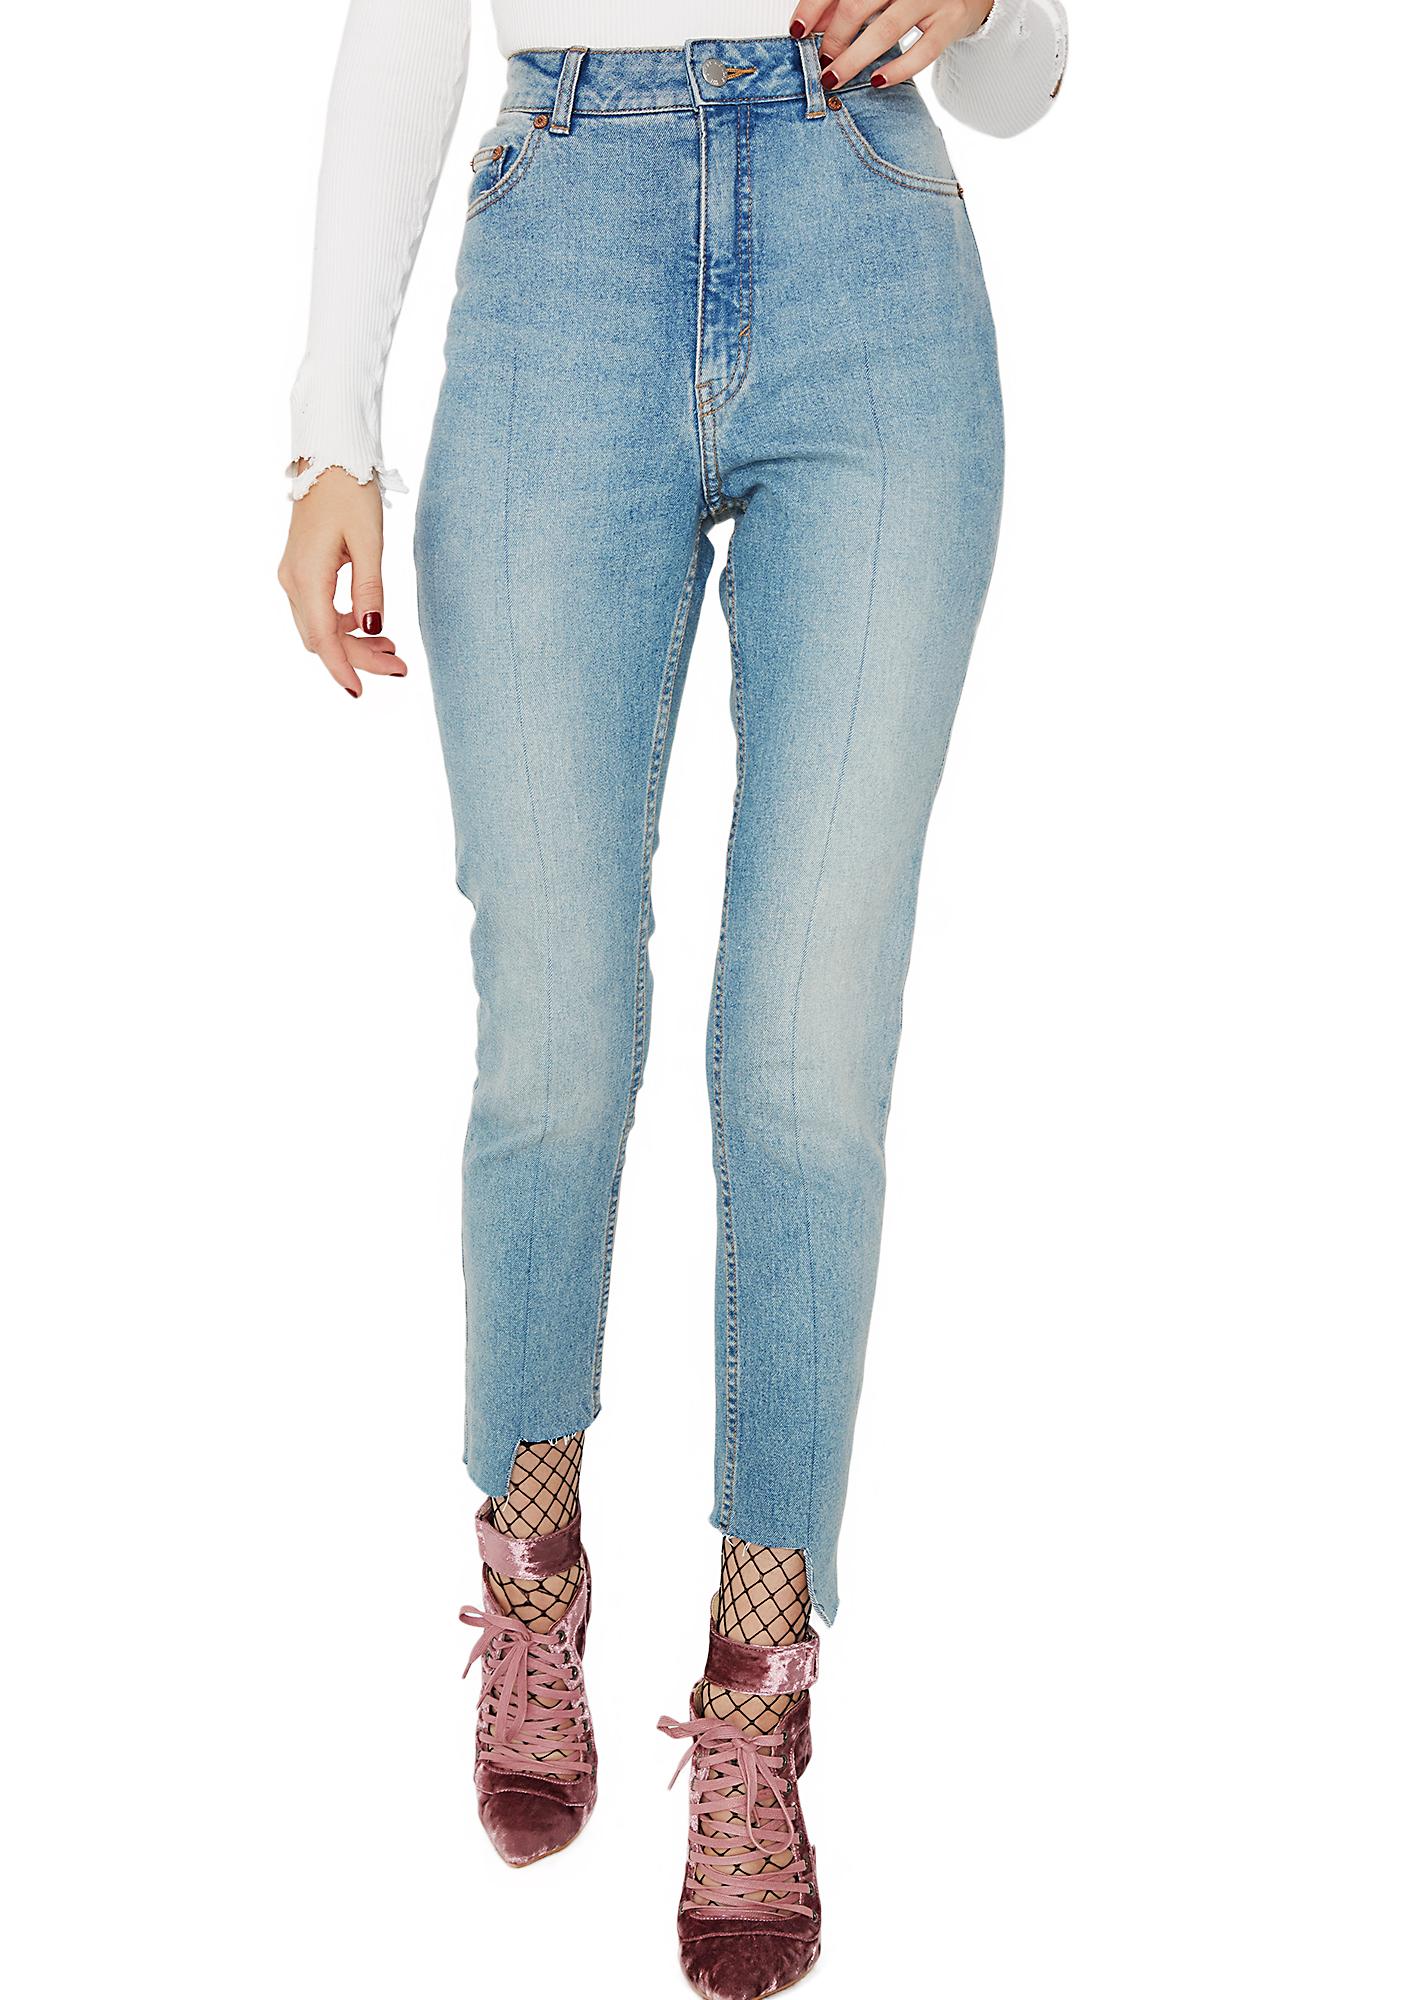 cheap monday donna jeans review